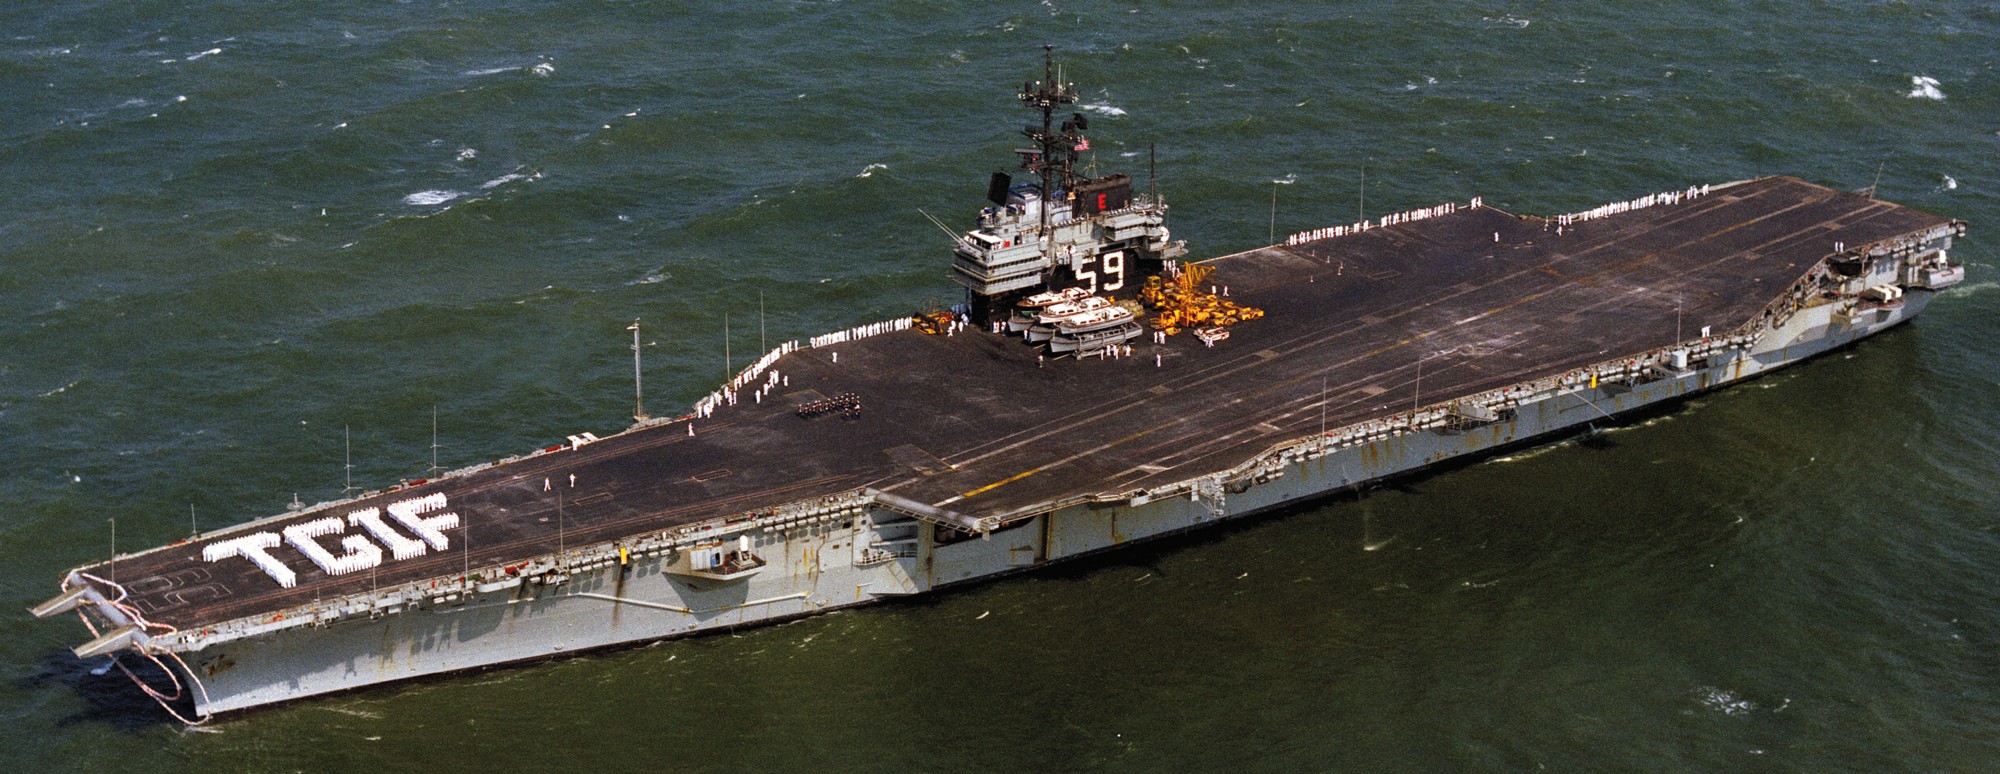 cv-59 uss forrestal aircraft carrier us navy naval station mayport florida 83